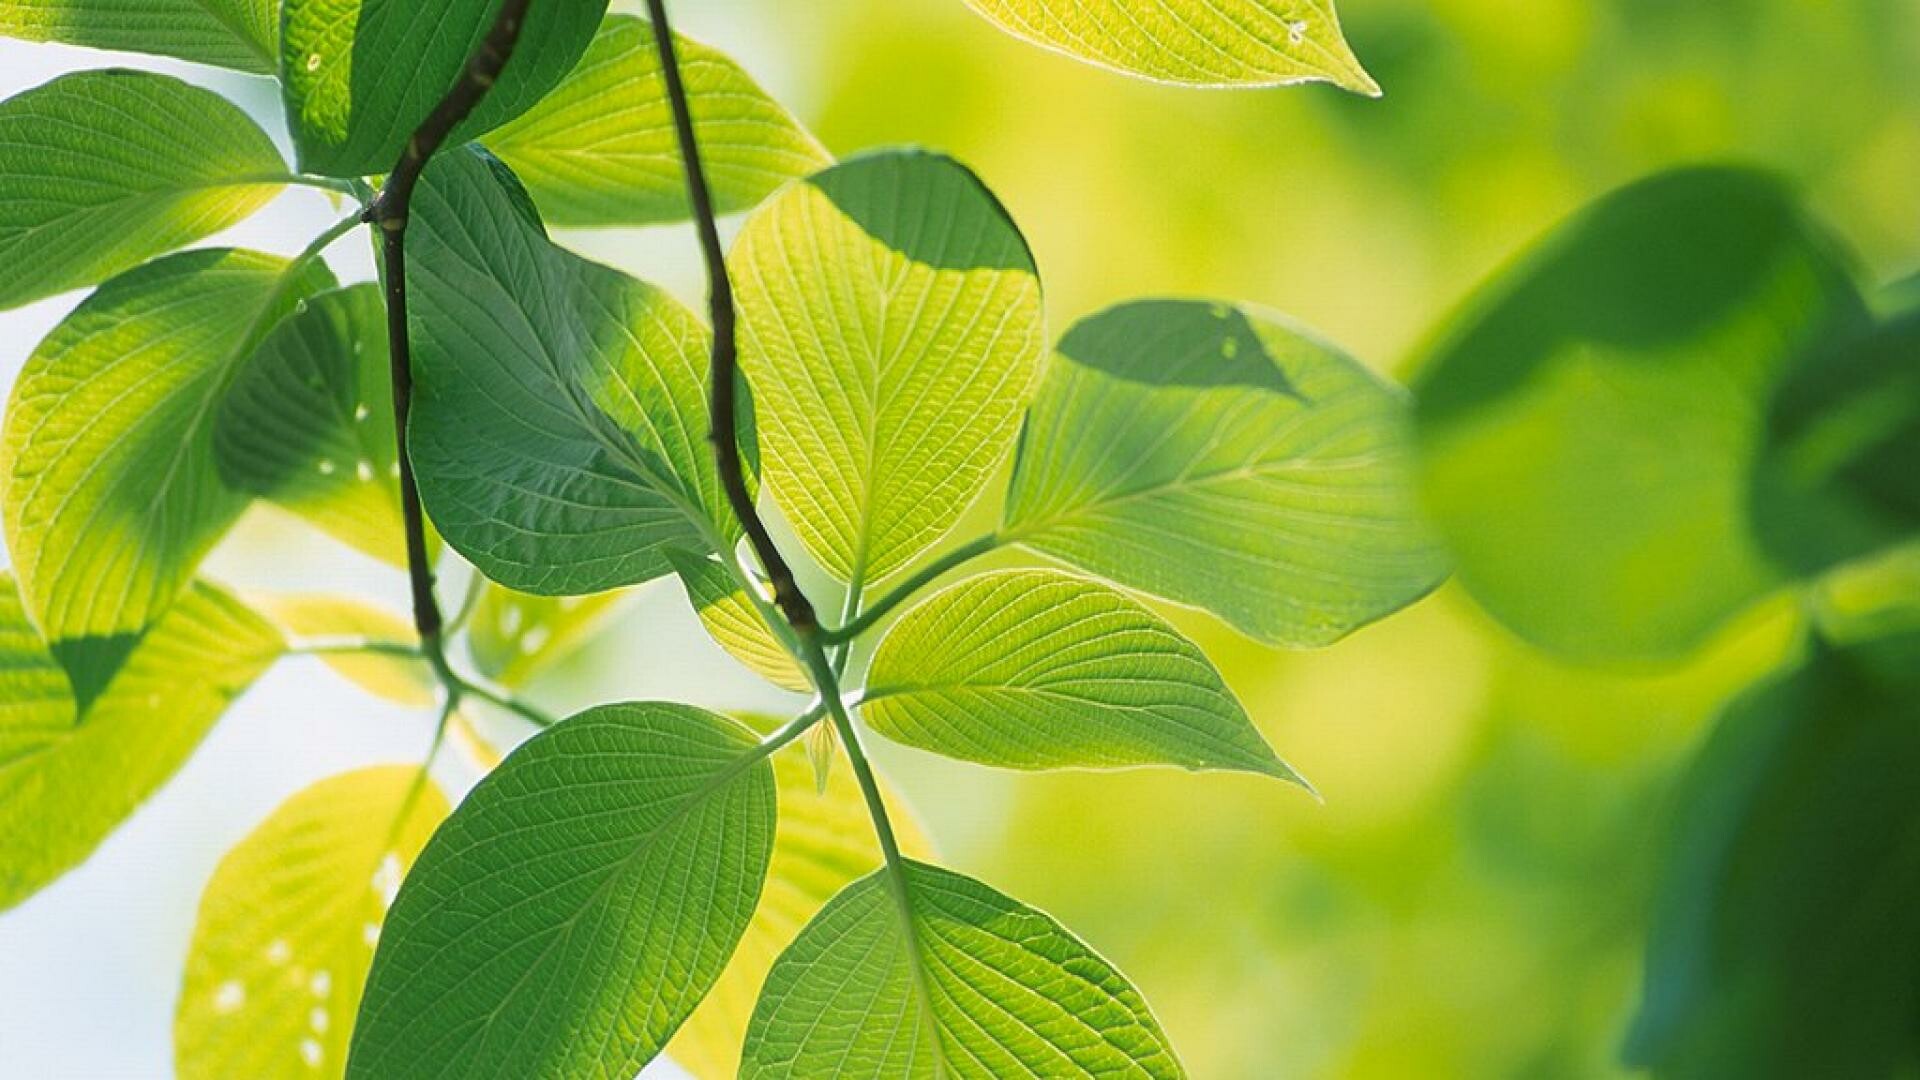 Leaves: Chlorophyll, Light shining through green foliage, Photosynthesis. 1920x1080 Full HD Wallpaper.